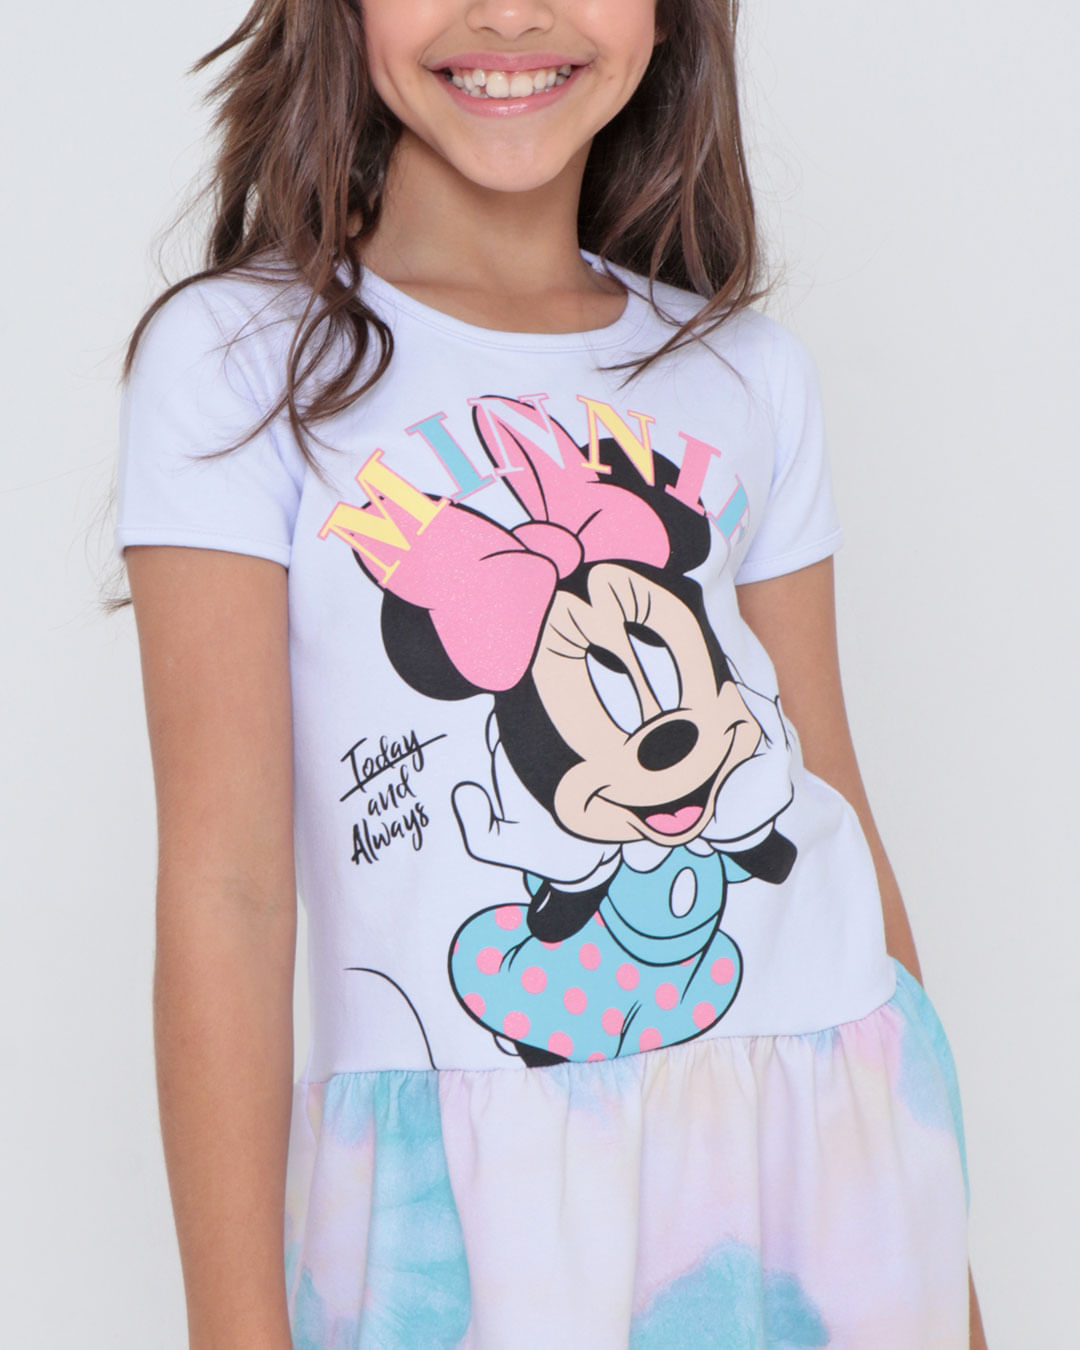 Vestido-Infantil-Tie-Dye-Minnie-Mouse-Disney-Branco